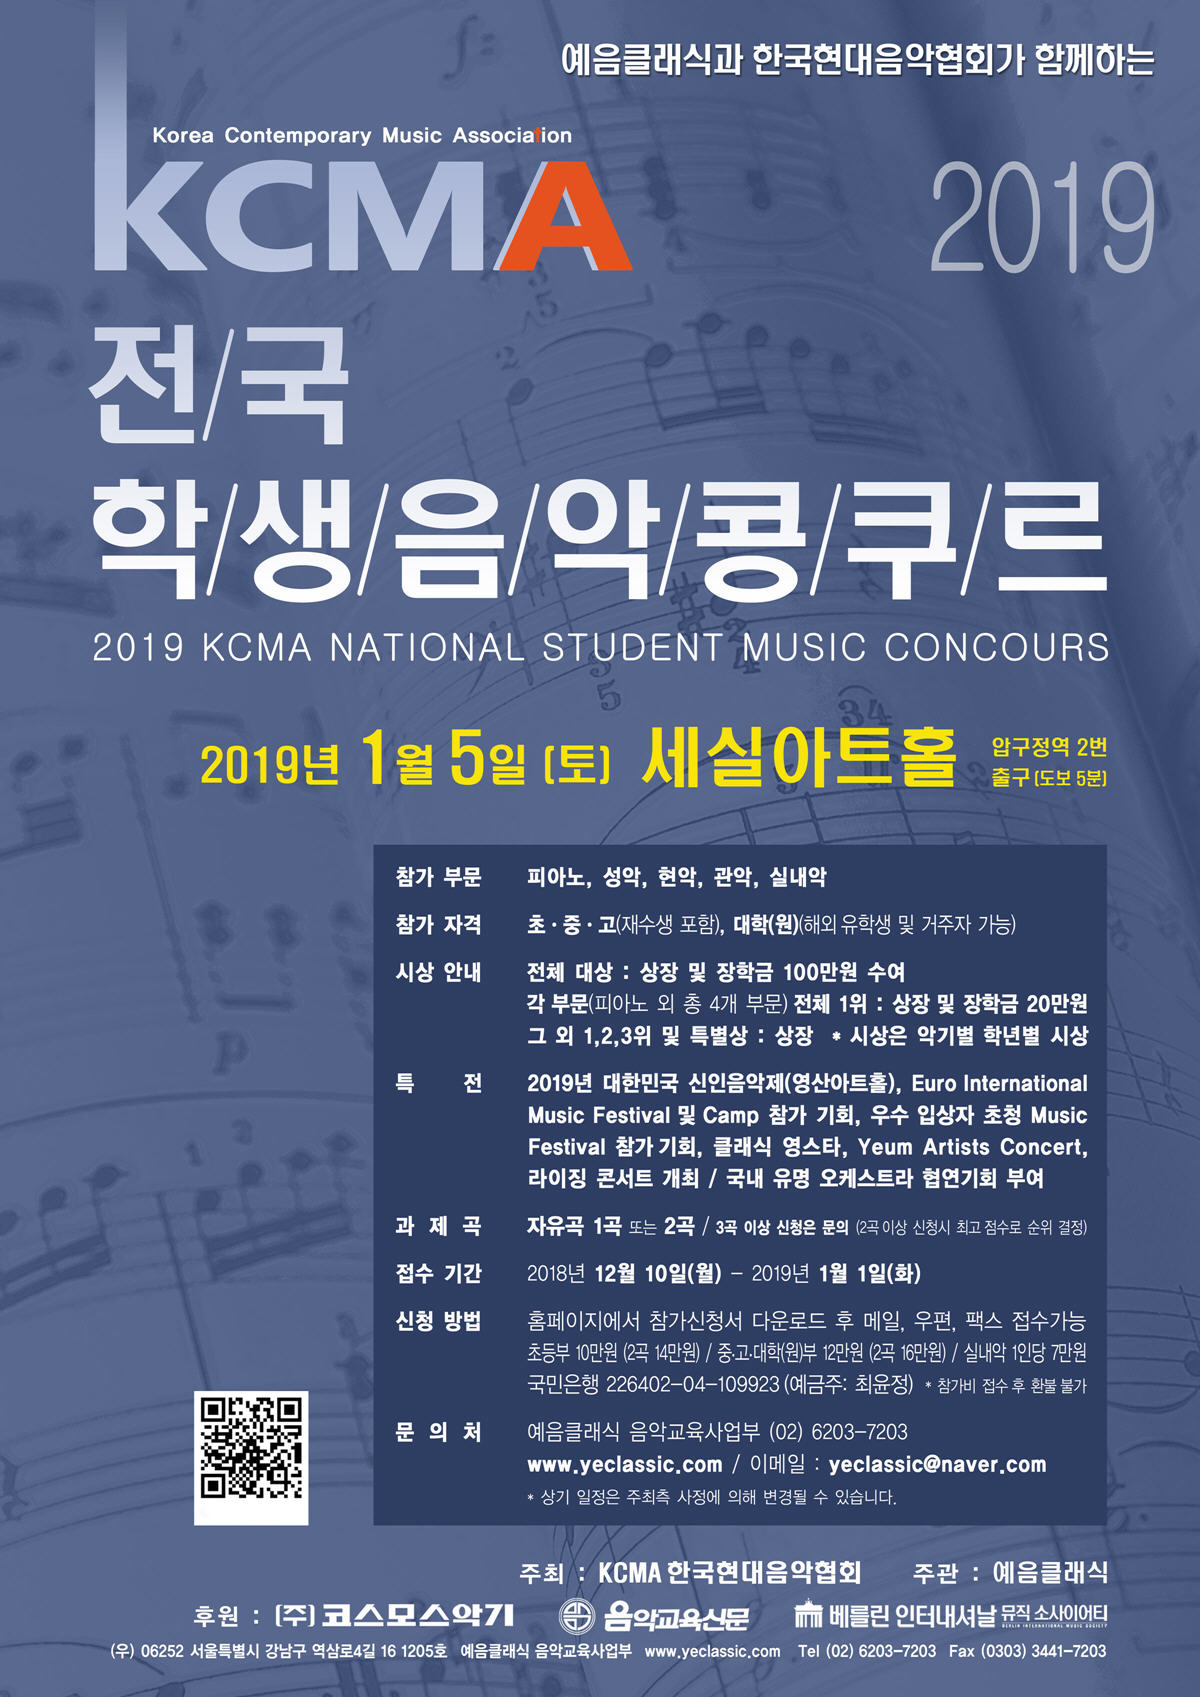 2019 kcma 전국학생음악콩쿠르 포스터 1200.jpg